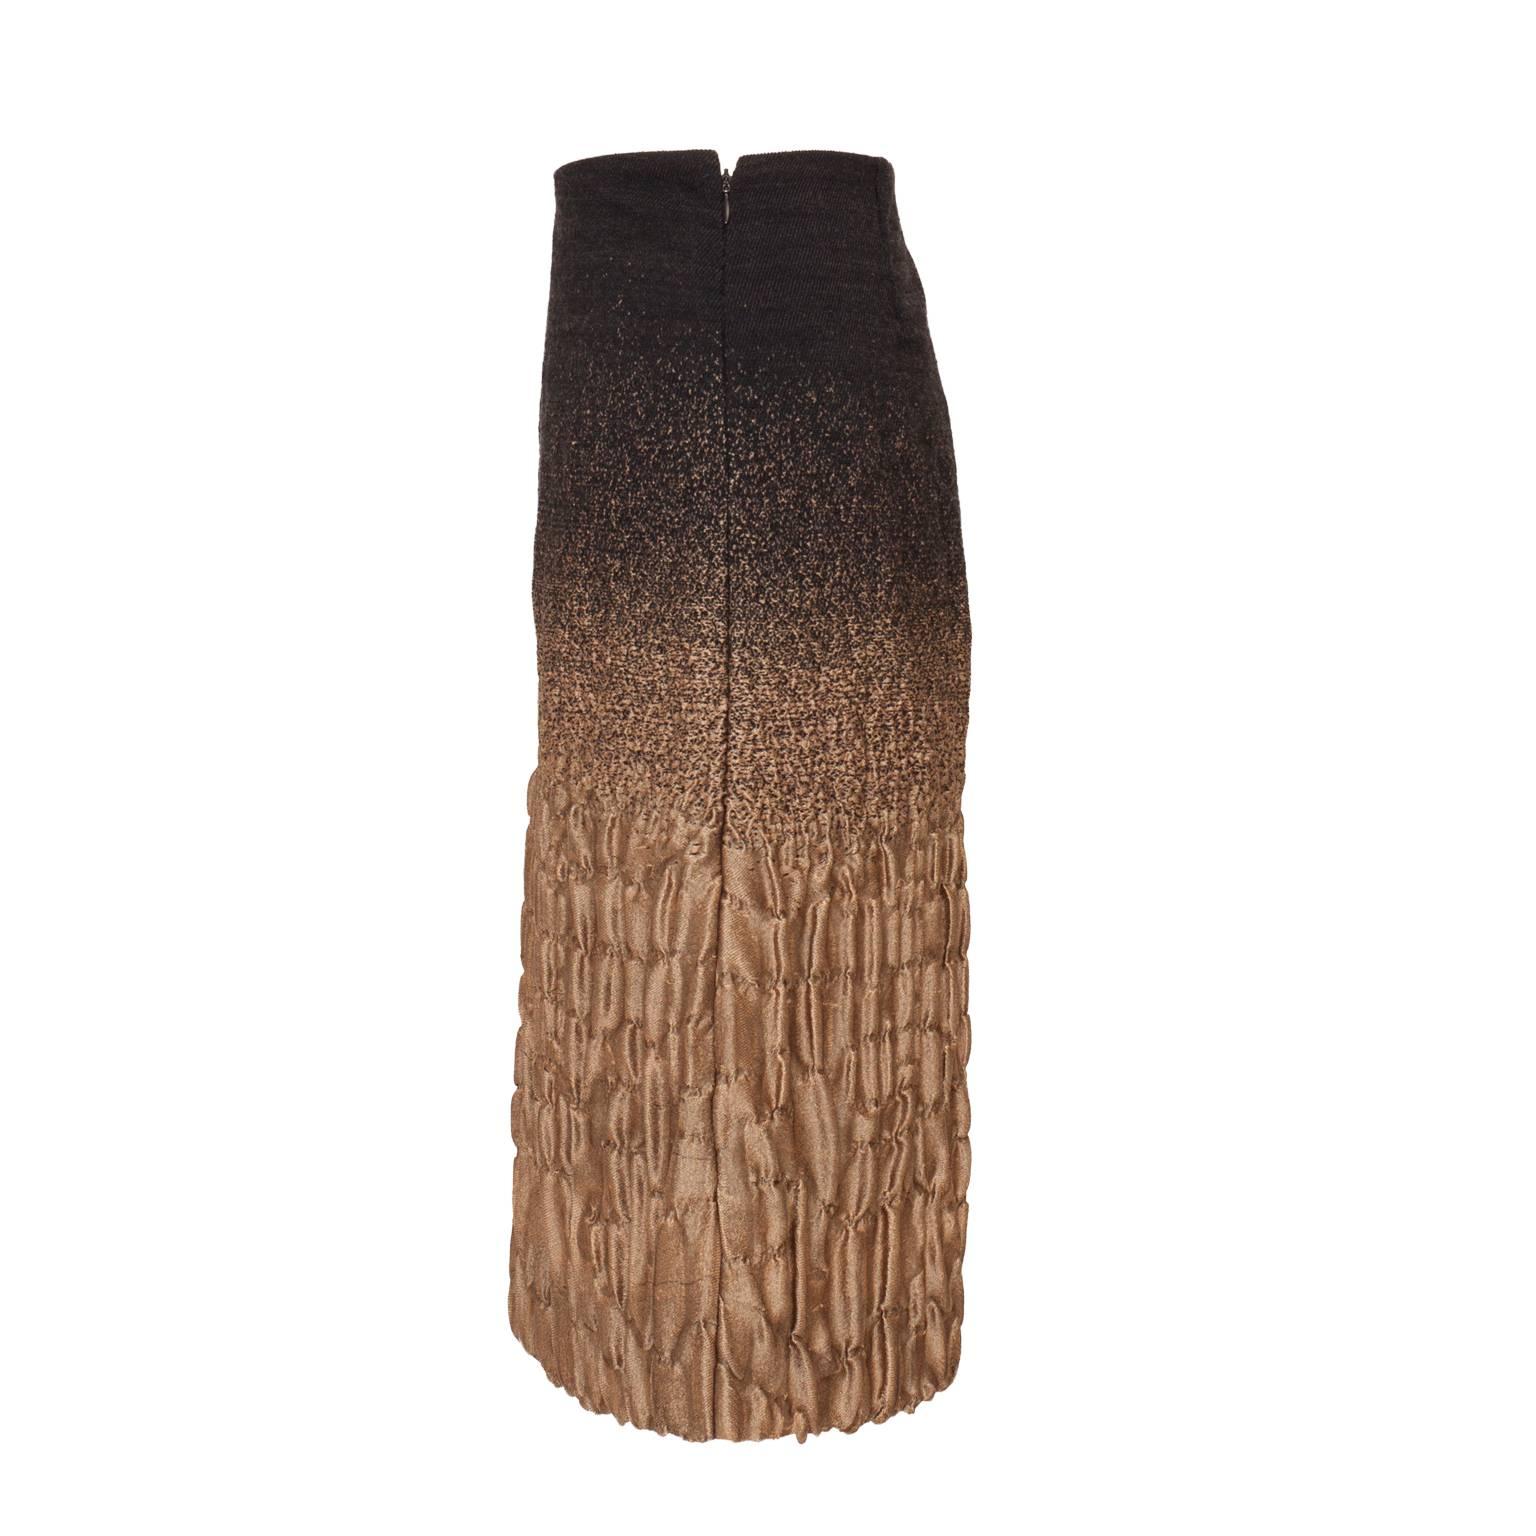 Elegant textured Prada skirt is from collection AW 2007. Side blind zip closure.
Measurements : 
Original size : 42 IT ( 38 EU, Medium US)
waist : 84 cm
Length : 58 cm
Material : 
Wool, Cotton, Silk, Nylon mix